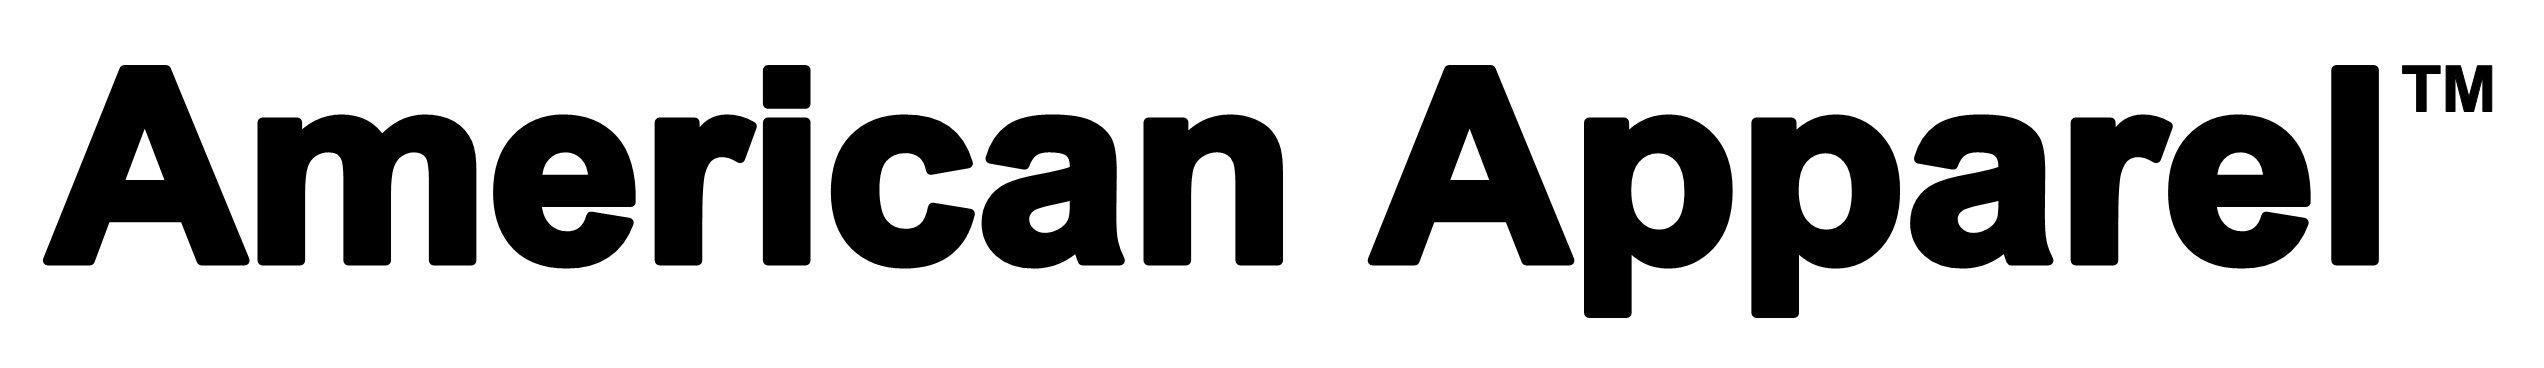 American Apparel Logo - File:American Apparel logo.jpg - Wikimedia Commons